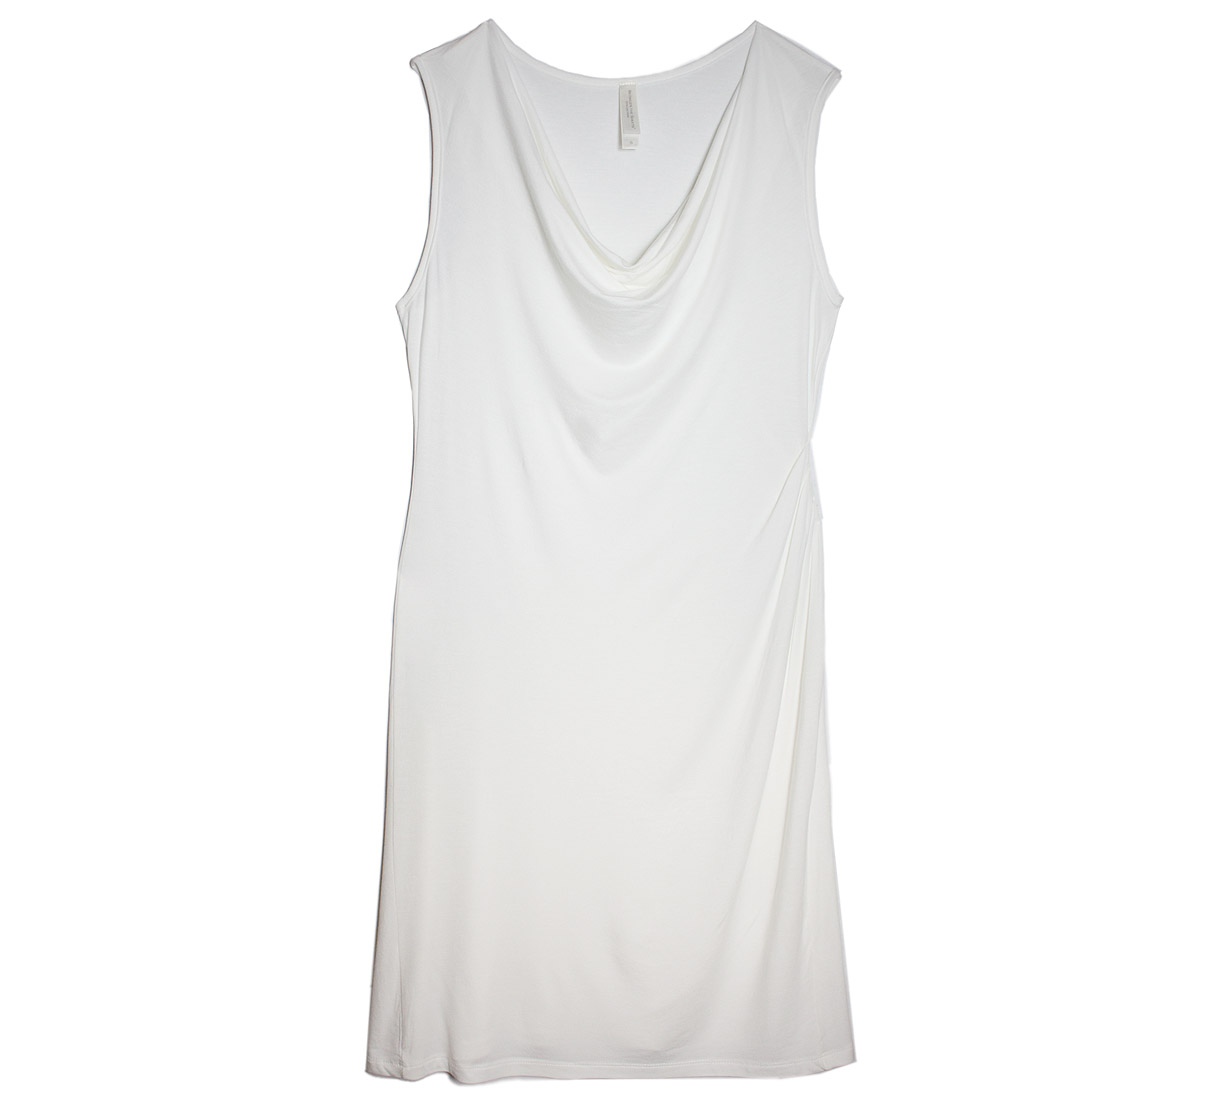 Matchplay Nightgown Ivory | Luxury Knit Nightwear | Between the Sheets Sleepwear